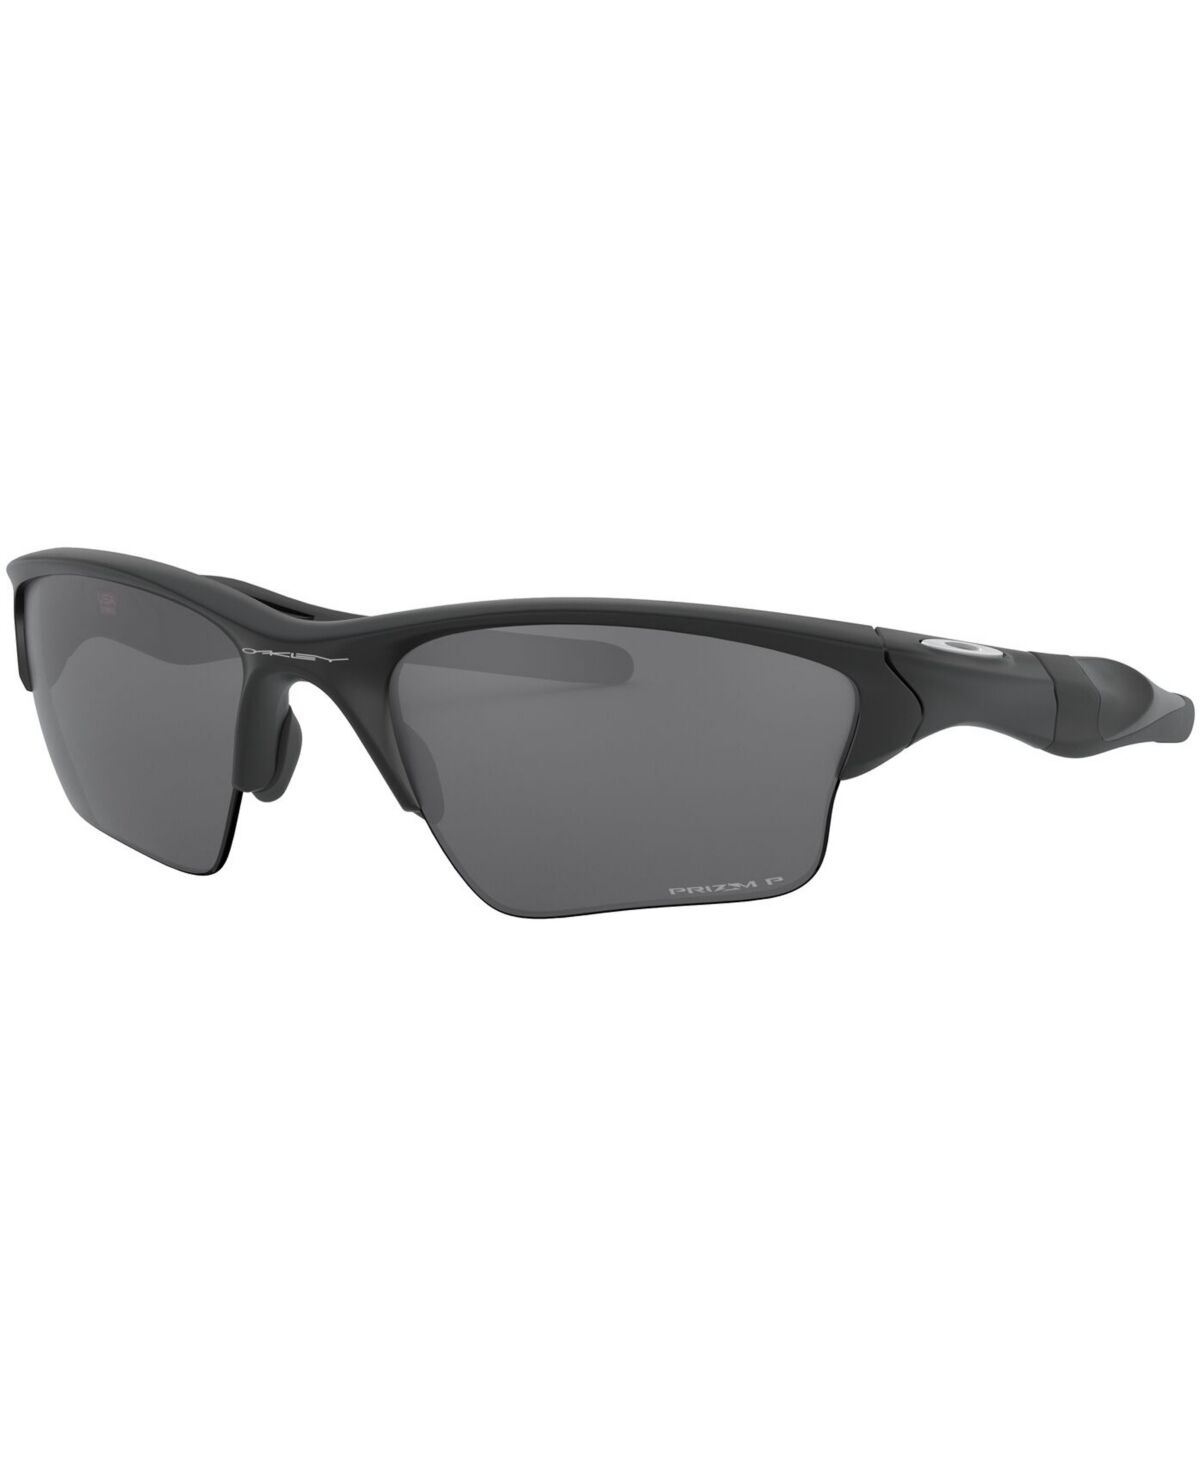 Oakley Men's Polarized Sunglasses, OO9154 - MATTE BLACK/PRIZM BLACK POLARIZED